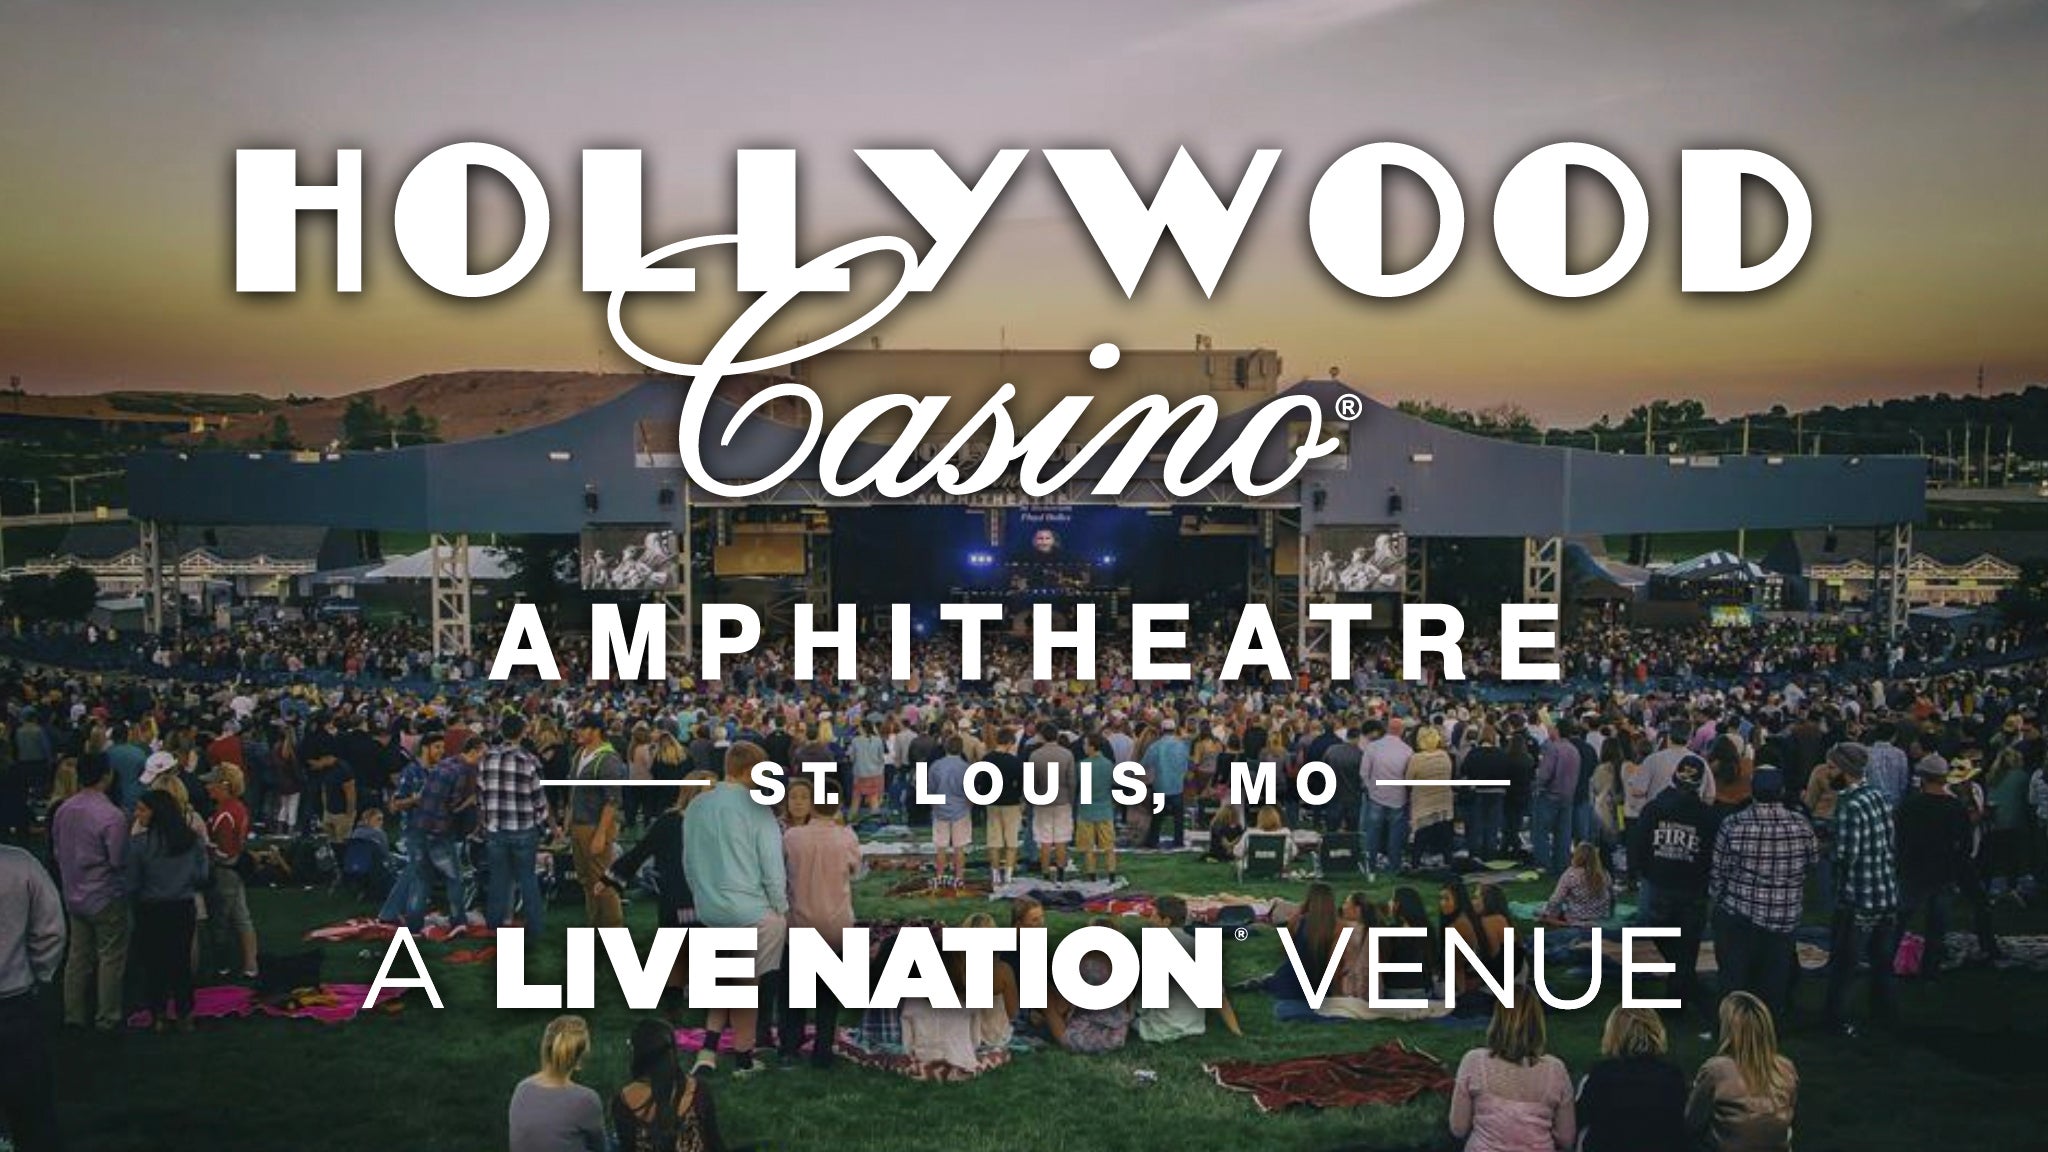 hollywood casino amphitheater st louis missouri address